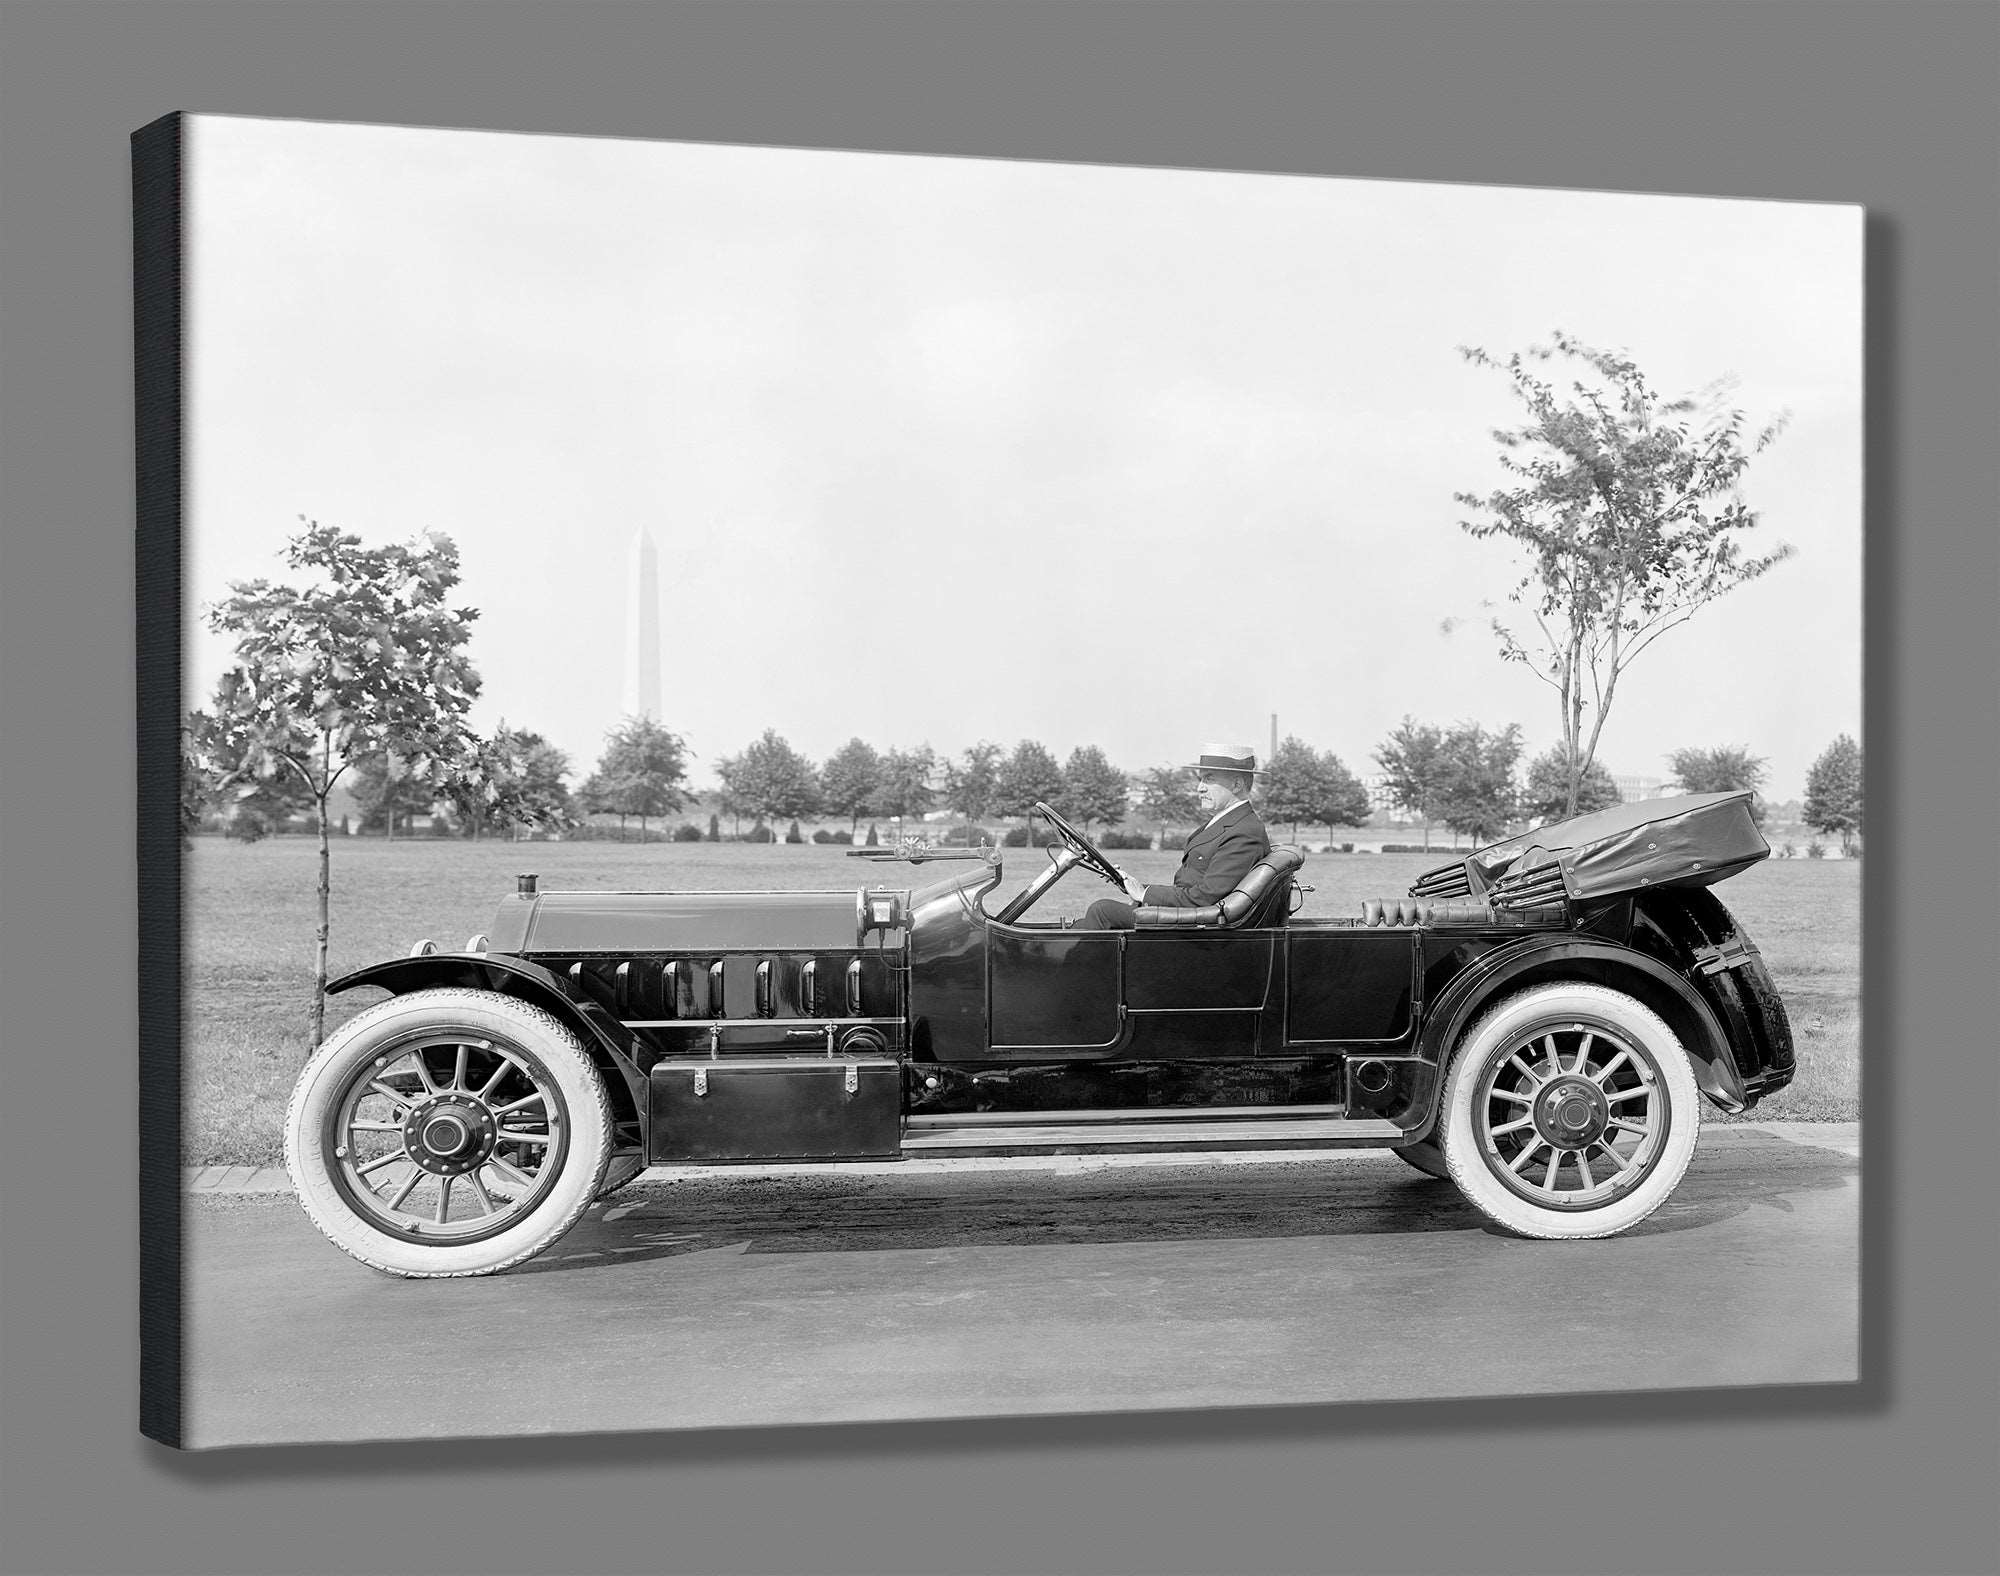 A mockup canvas print of a vintage photograph of a Marmon Motor Car Company vehicle